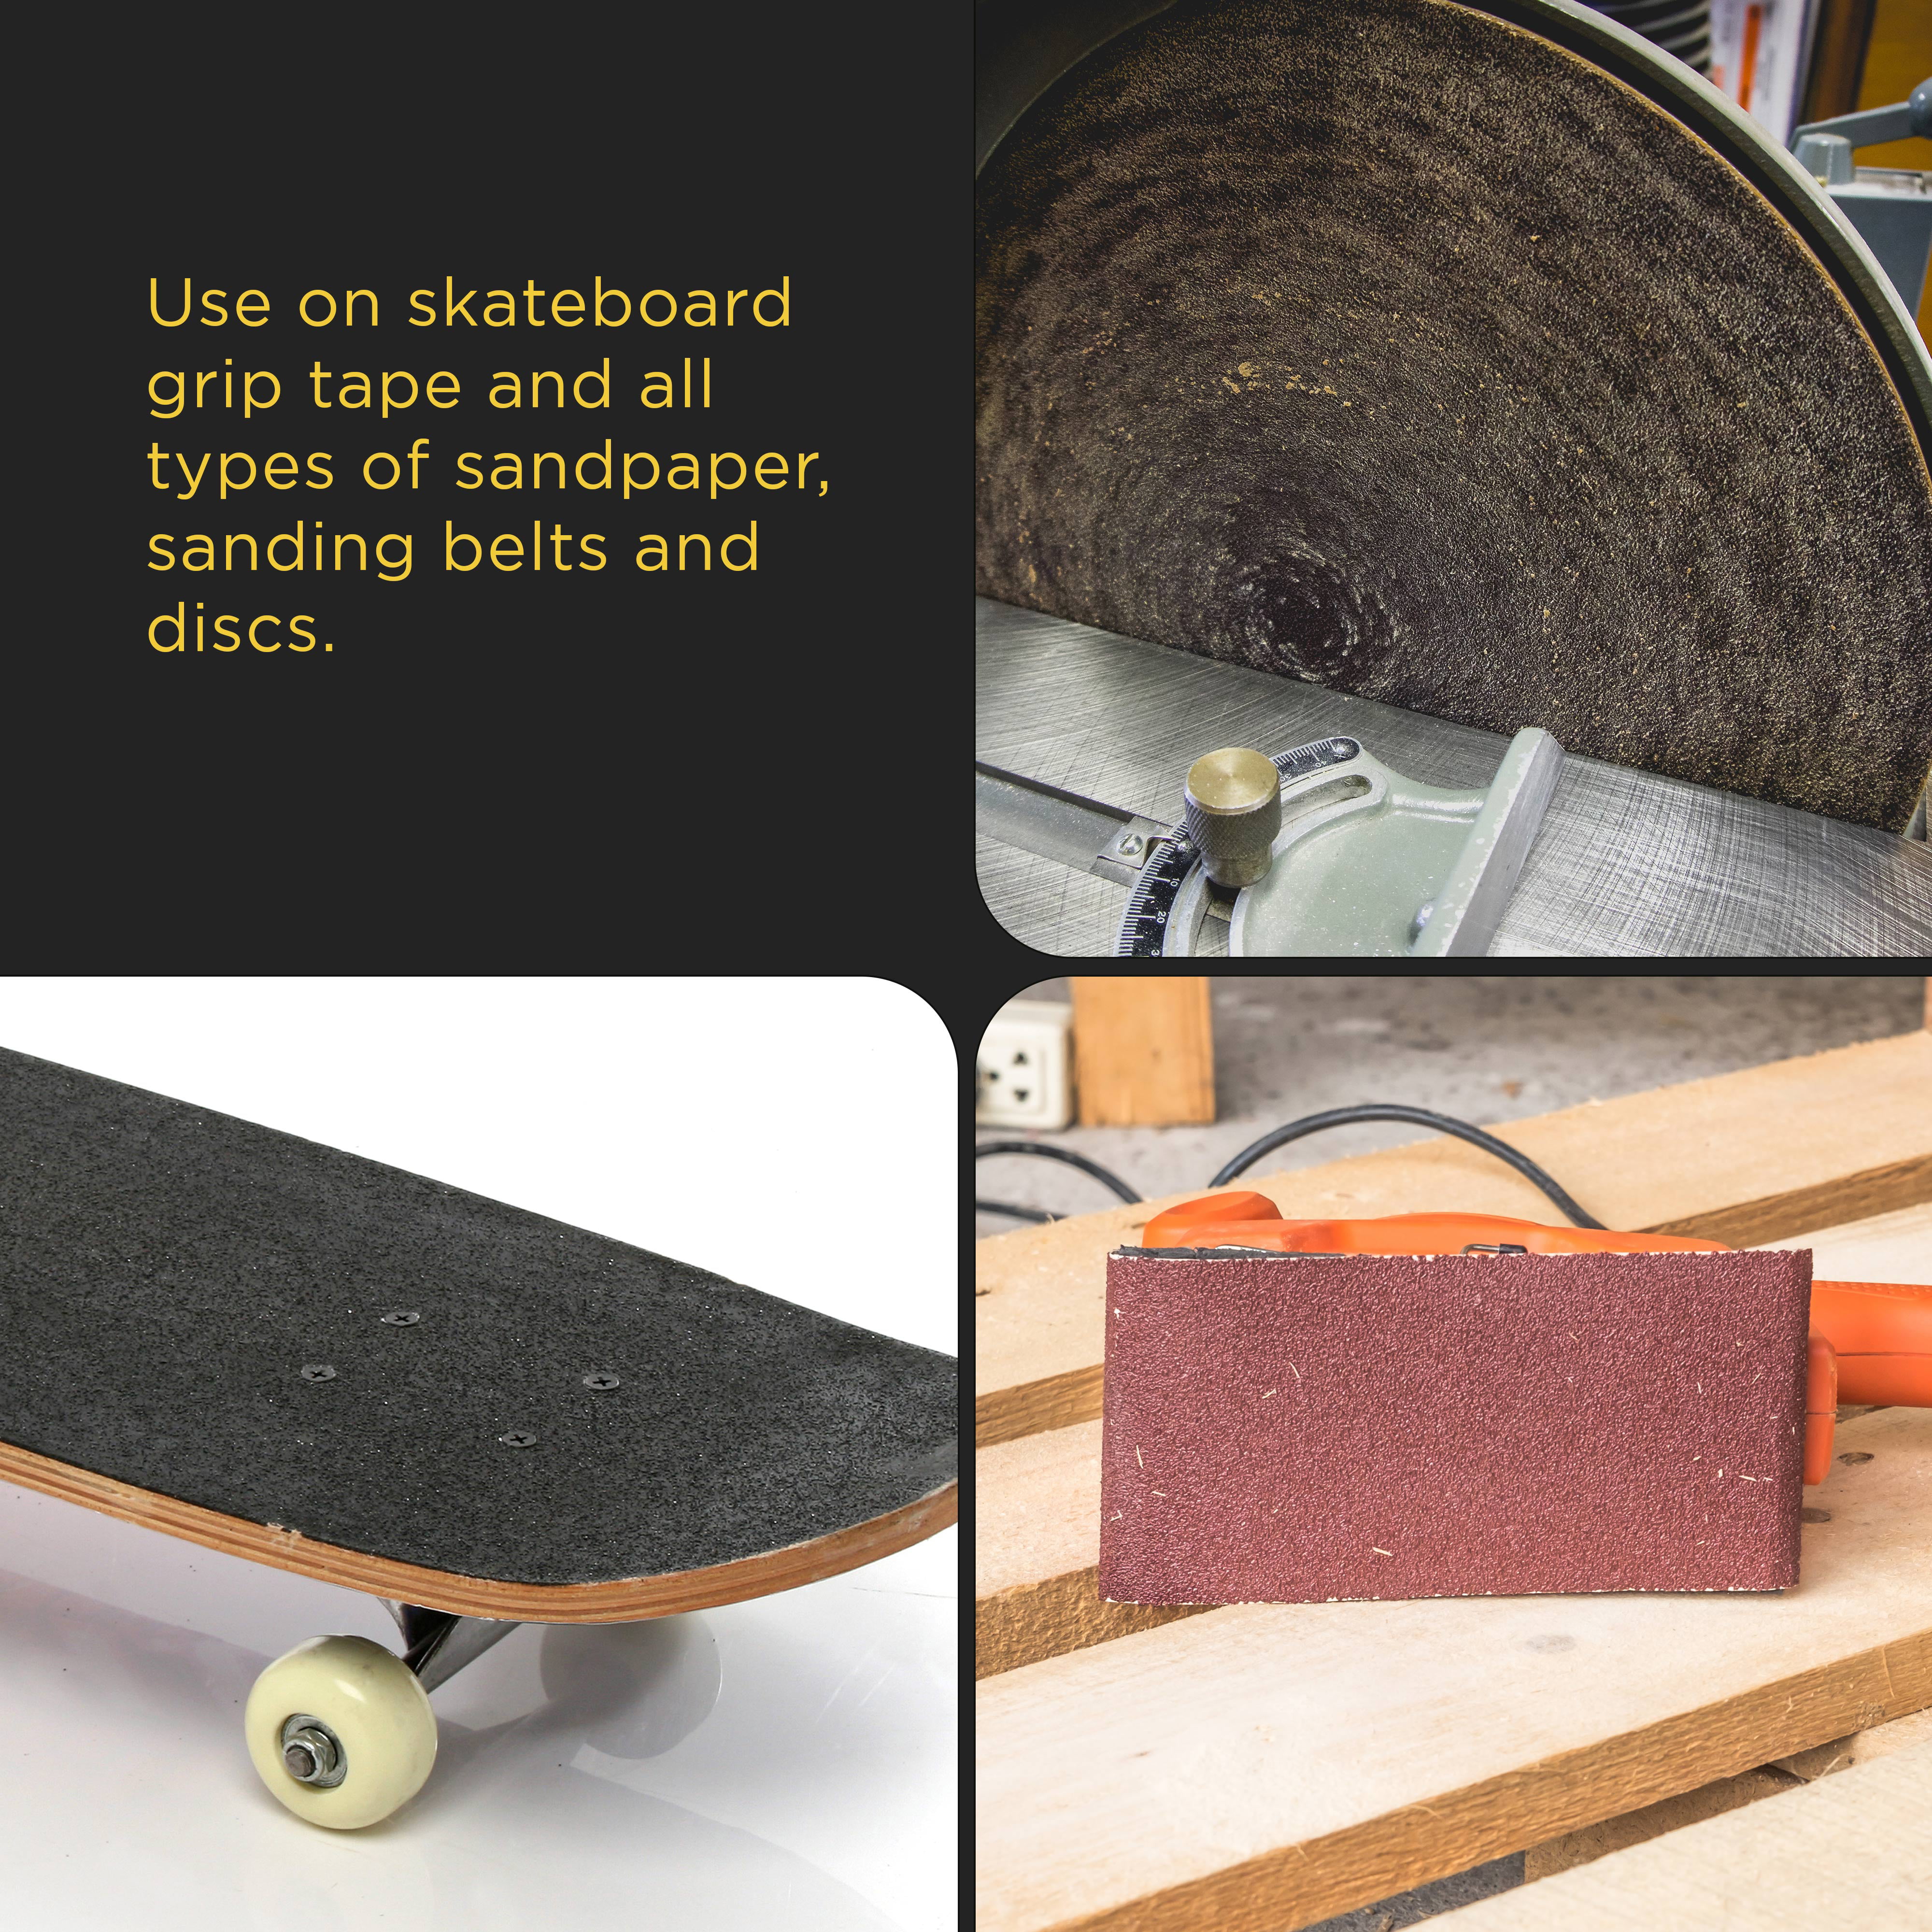 Skateboard Griptape Sandpaper Dust Glue Sticker Cleaning Eraser Wipe Cleaner 